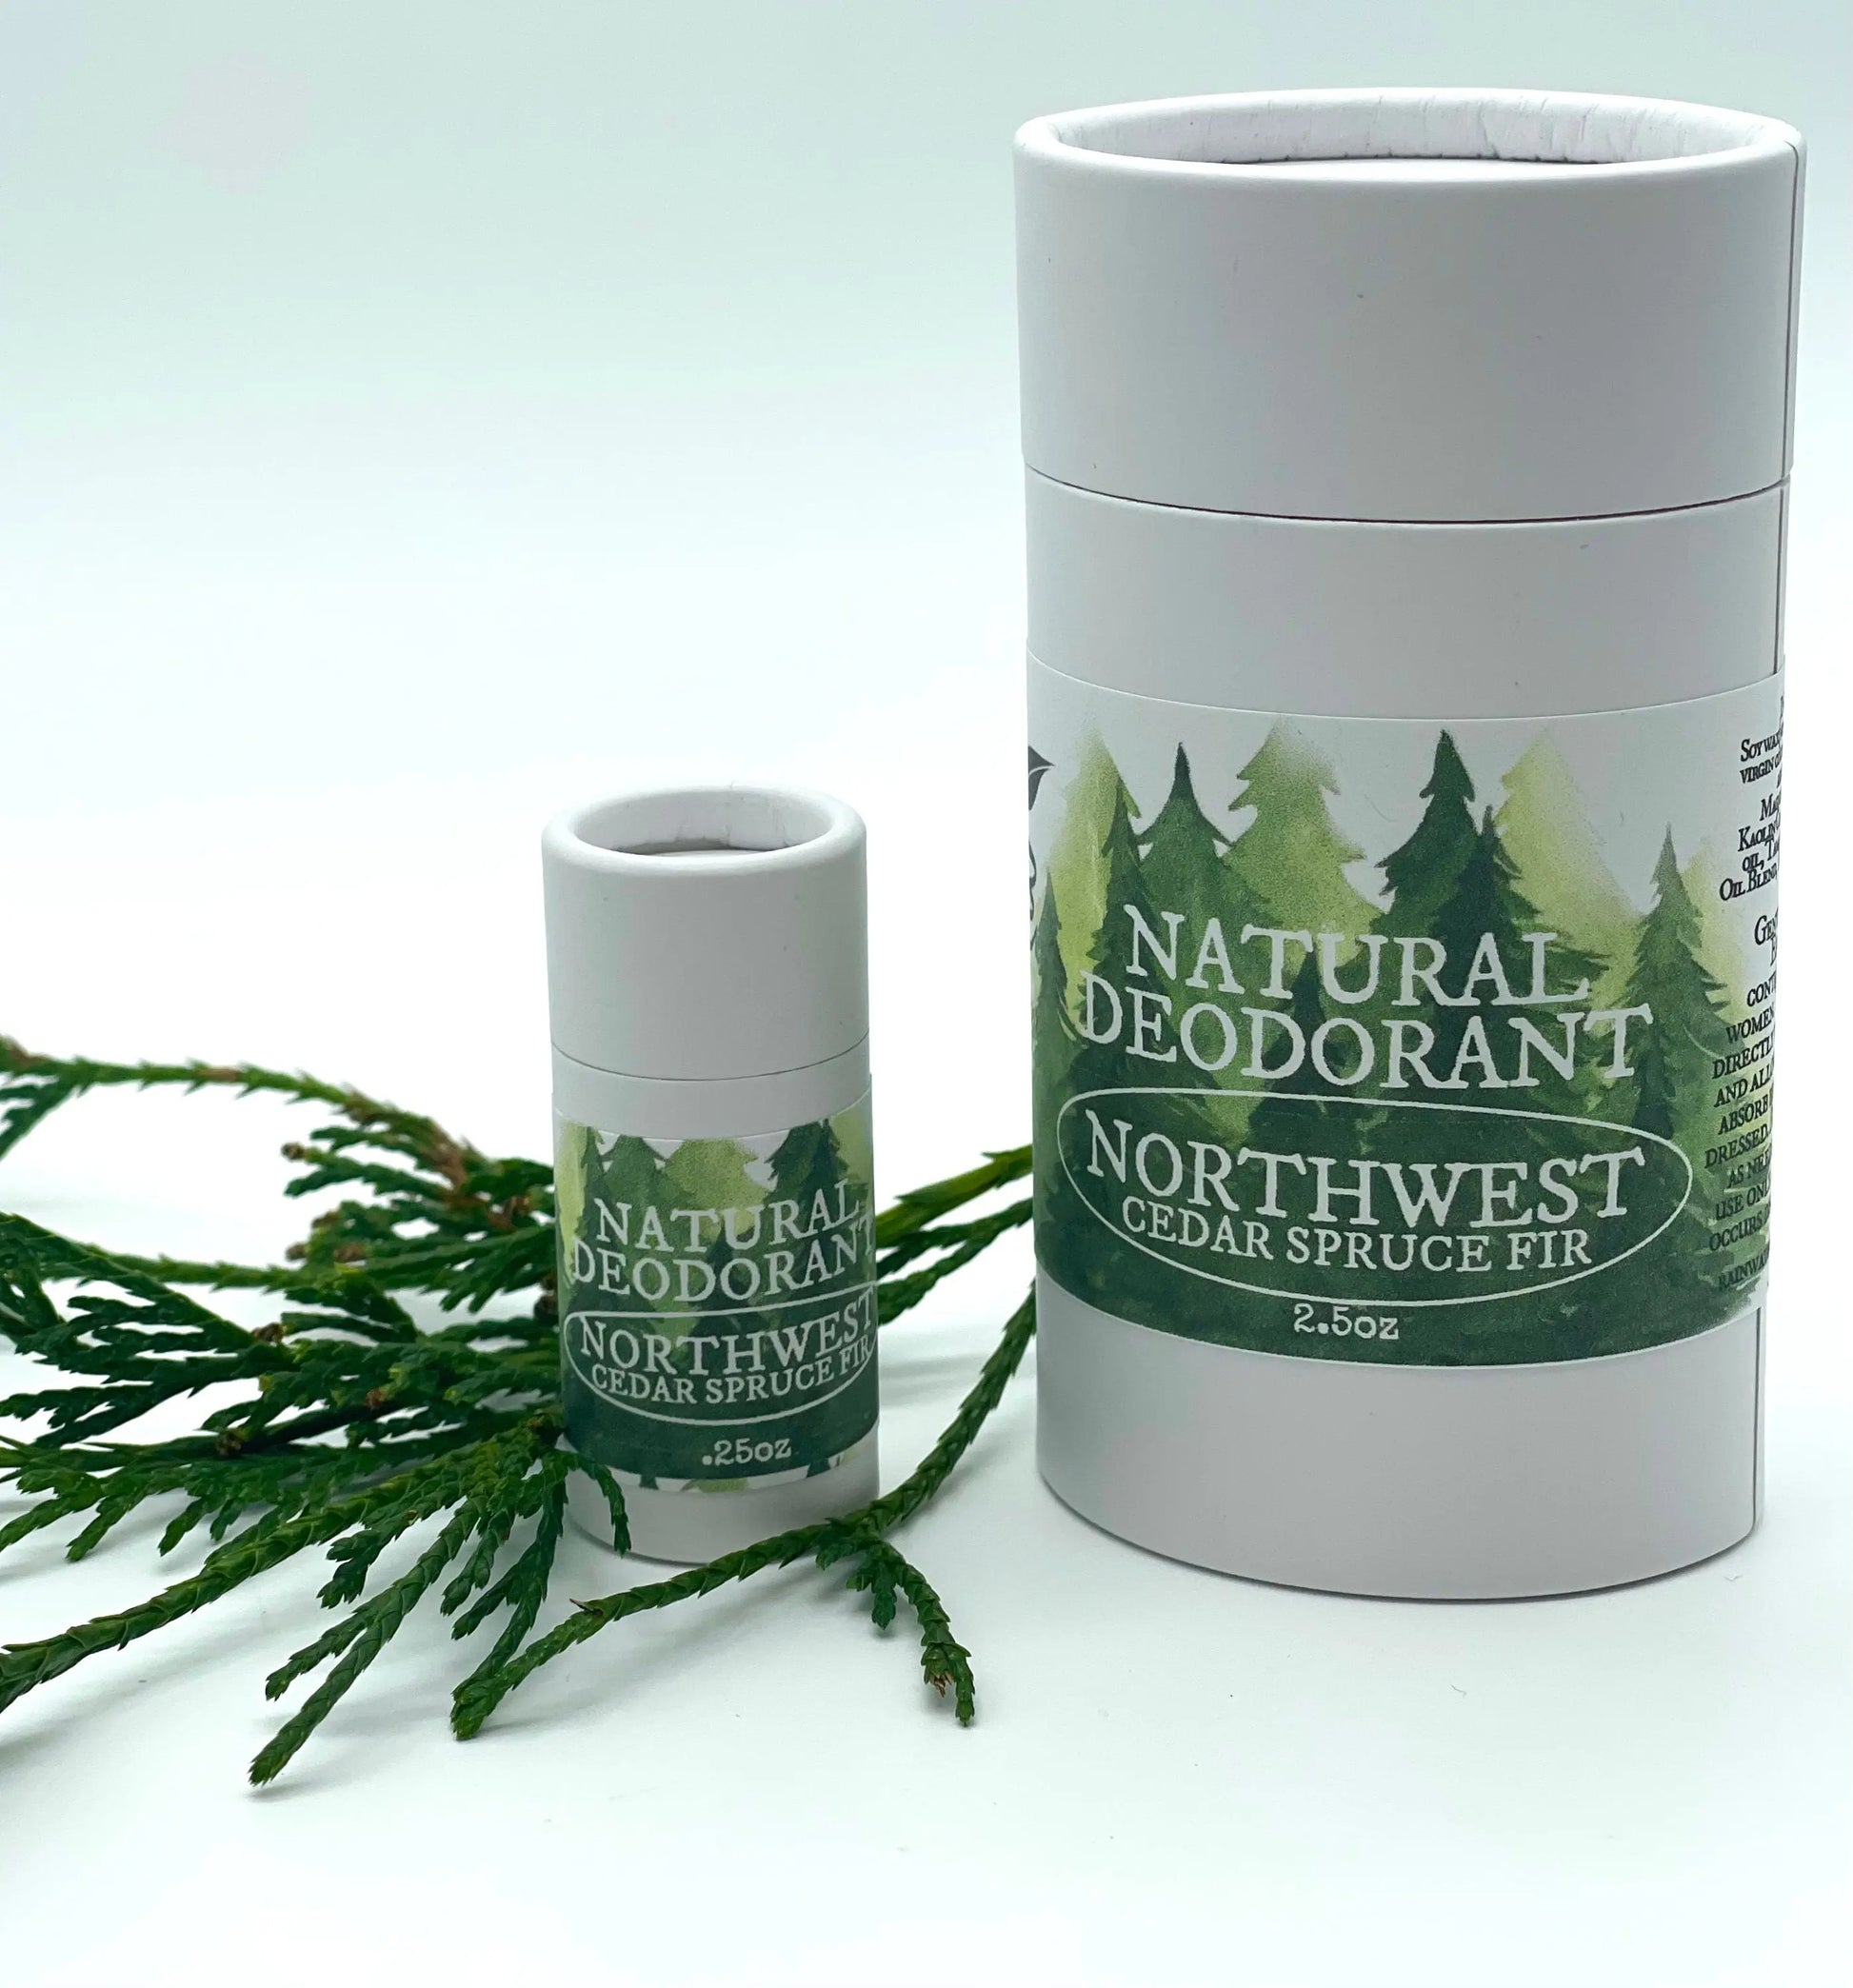 Northwest Natural Deodorant for sensitive skin